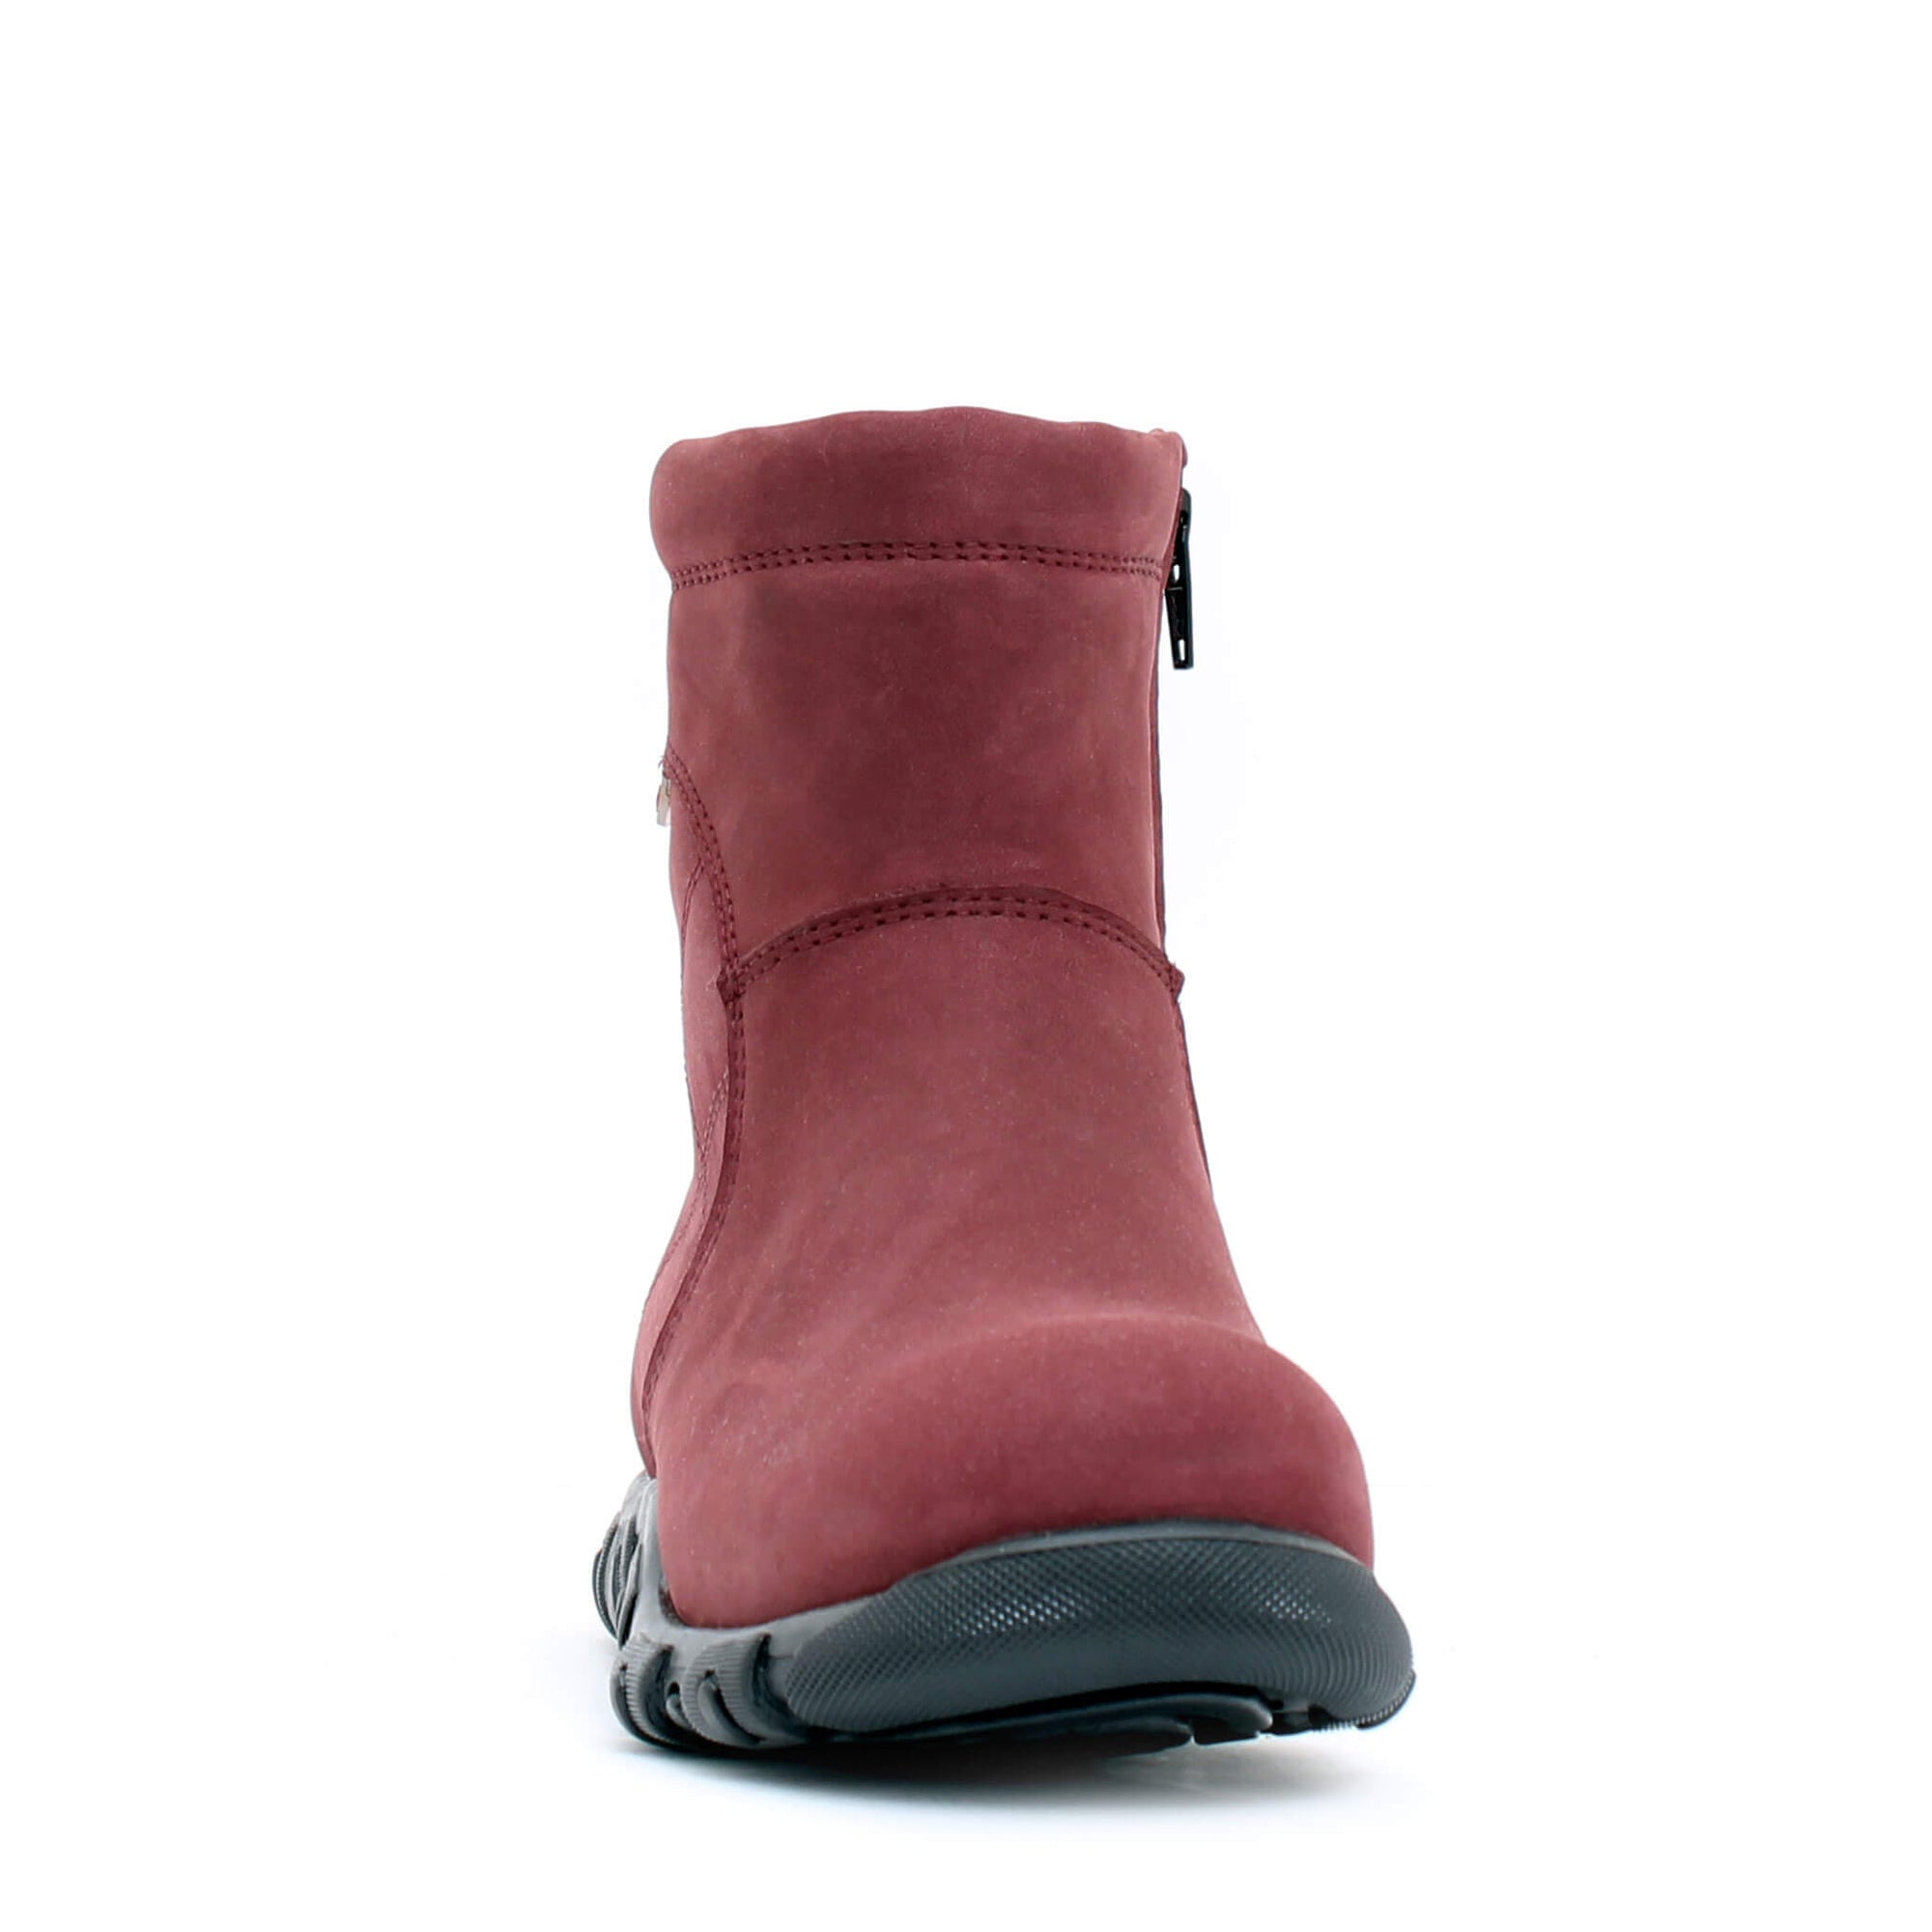 Paris Winter Boot for women - Bordo